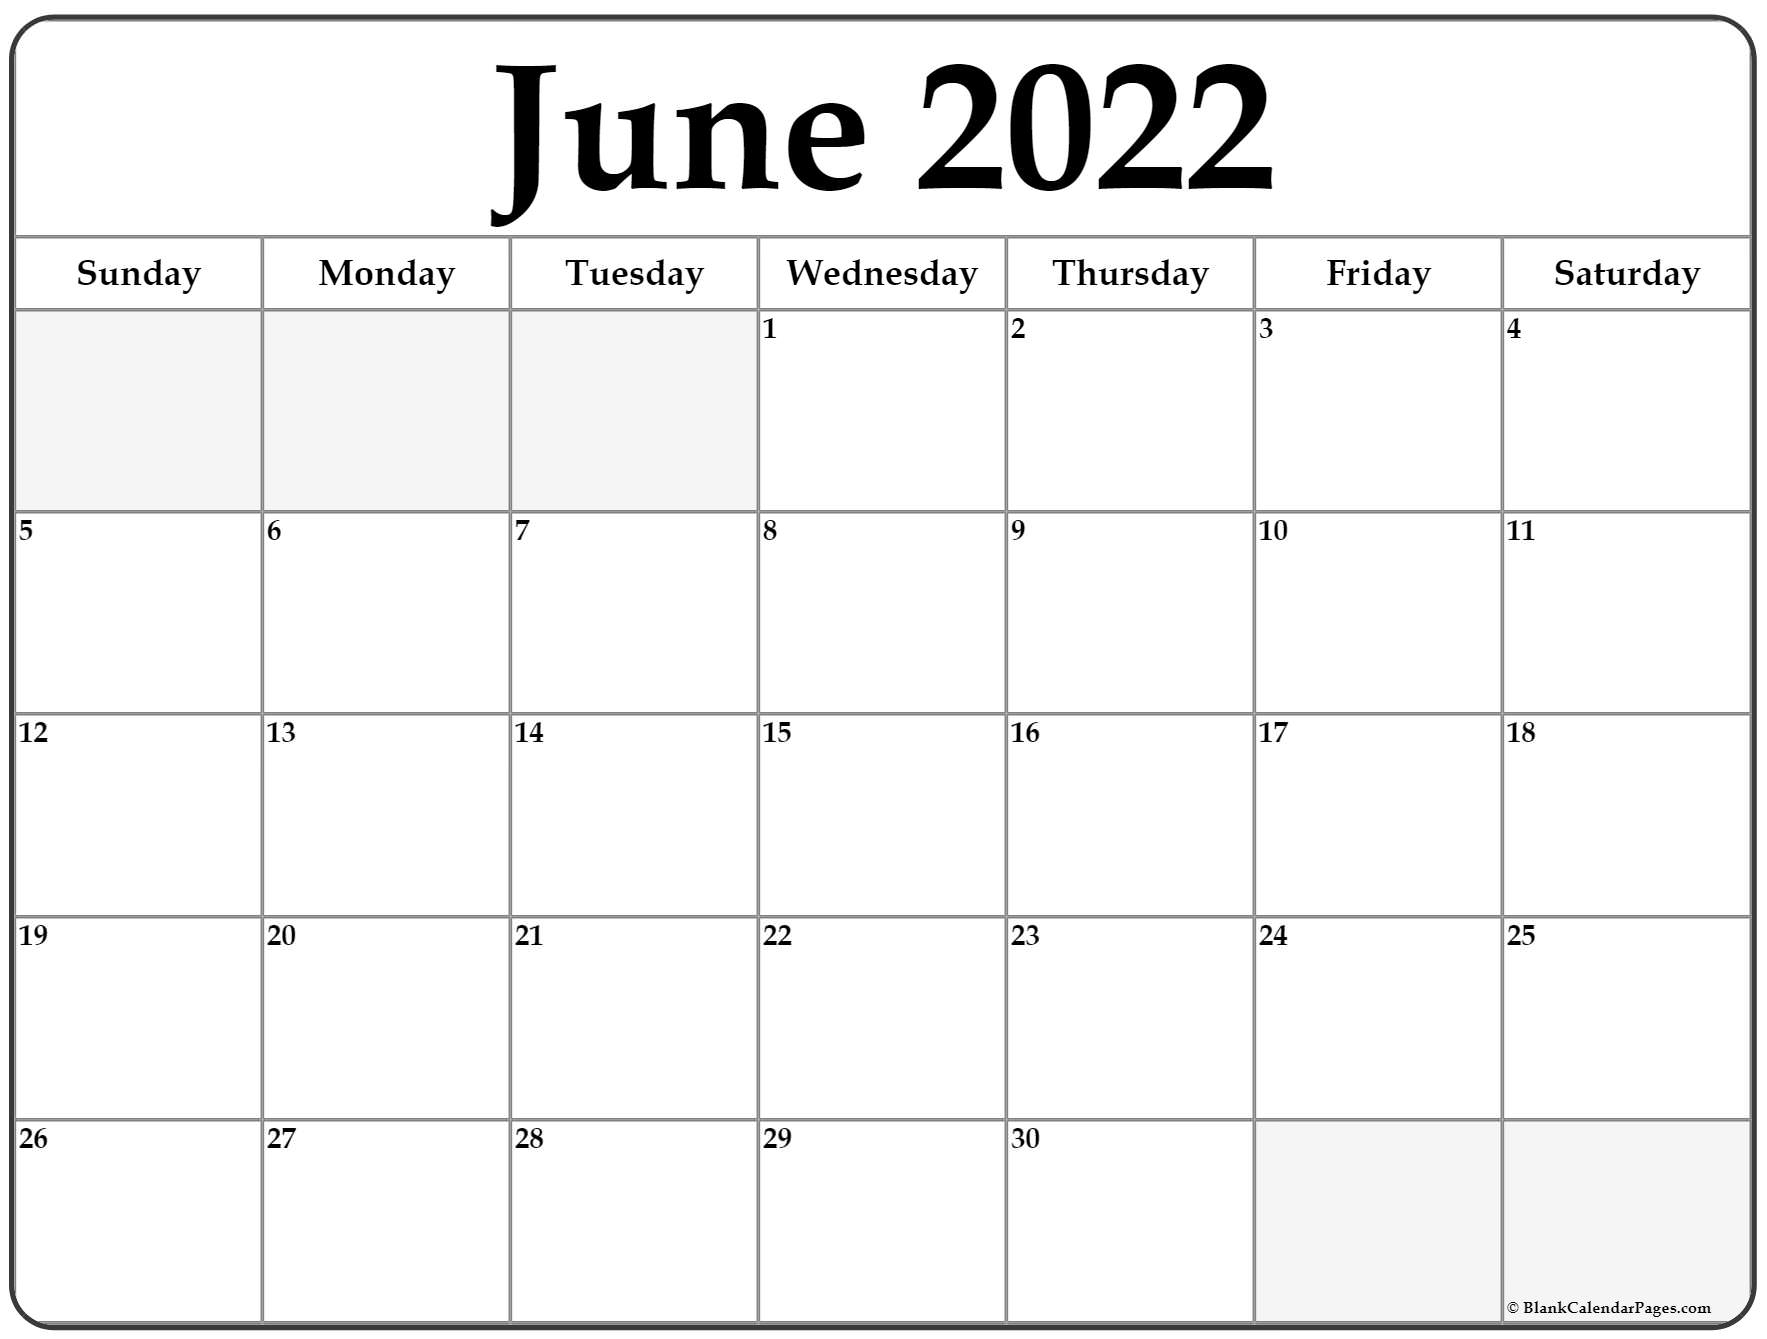 Catch 2022 June Malayalam Calendar